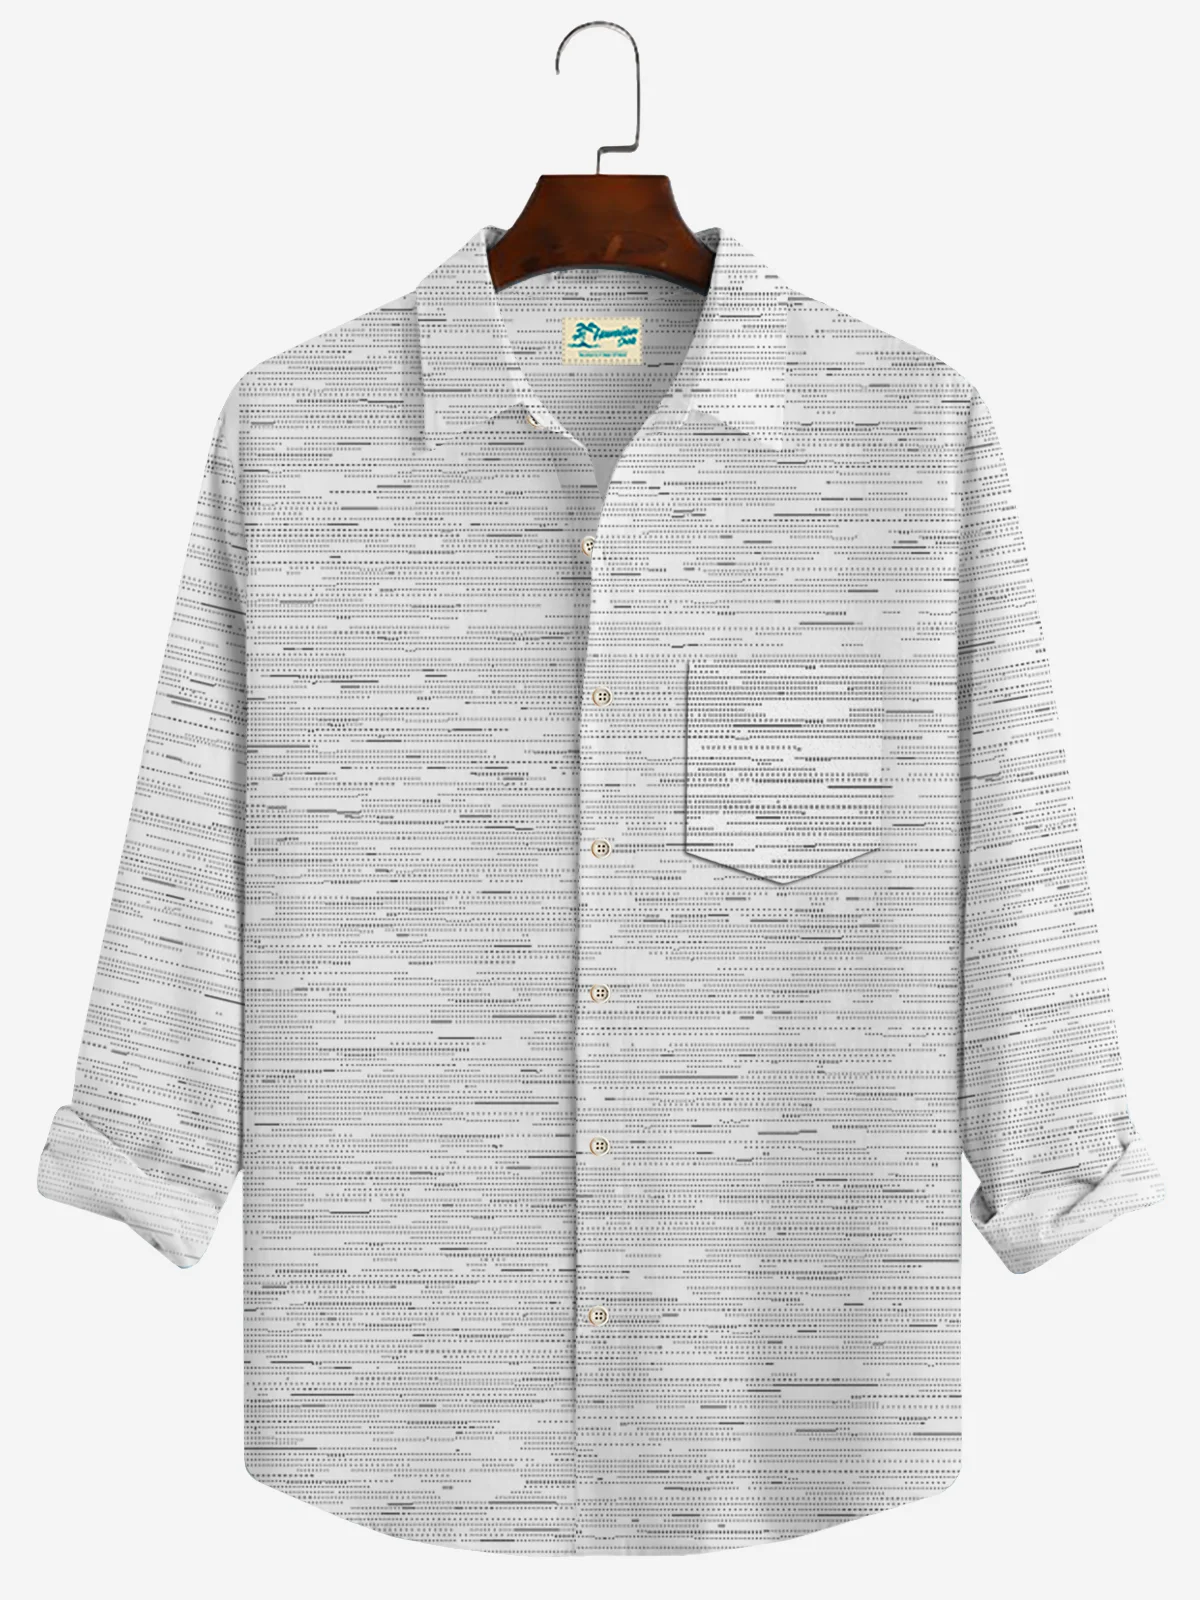 Royaura 50's Retro Mid-Century Atom Geometric Men's White Casual Shirts Stretch Plus Size  Camp Pocket Shirts